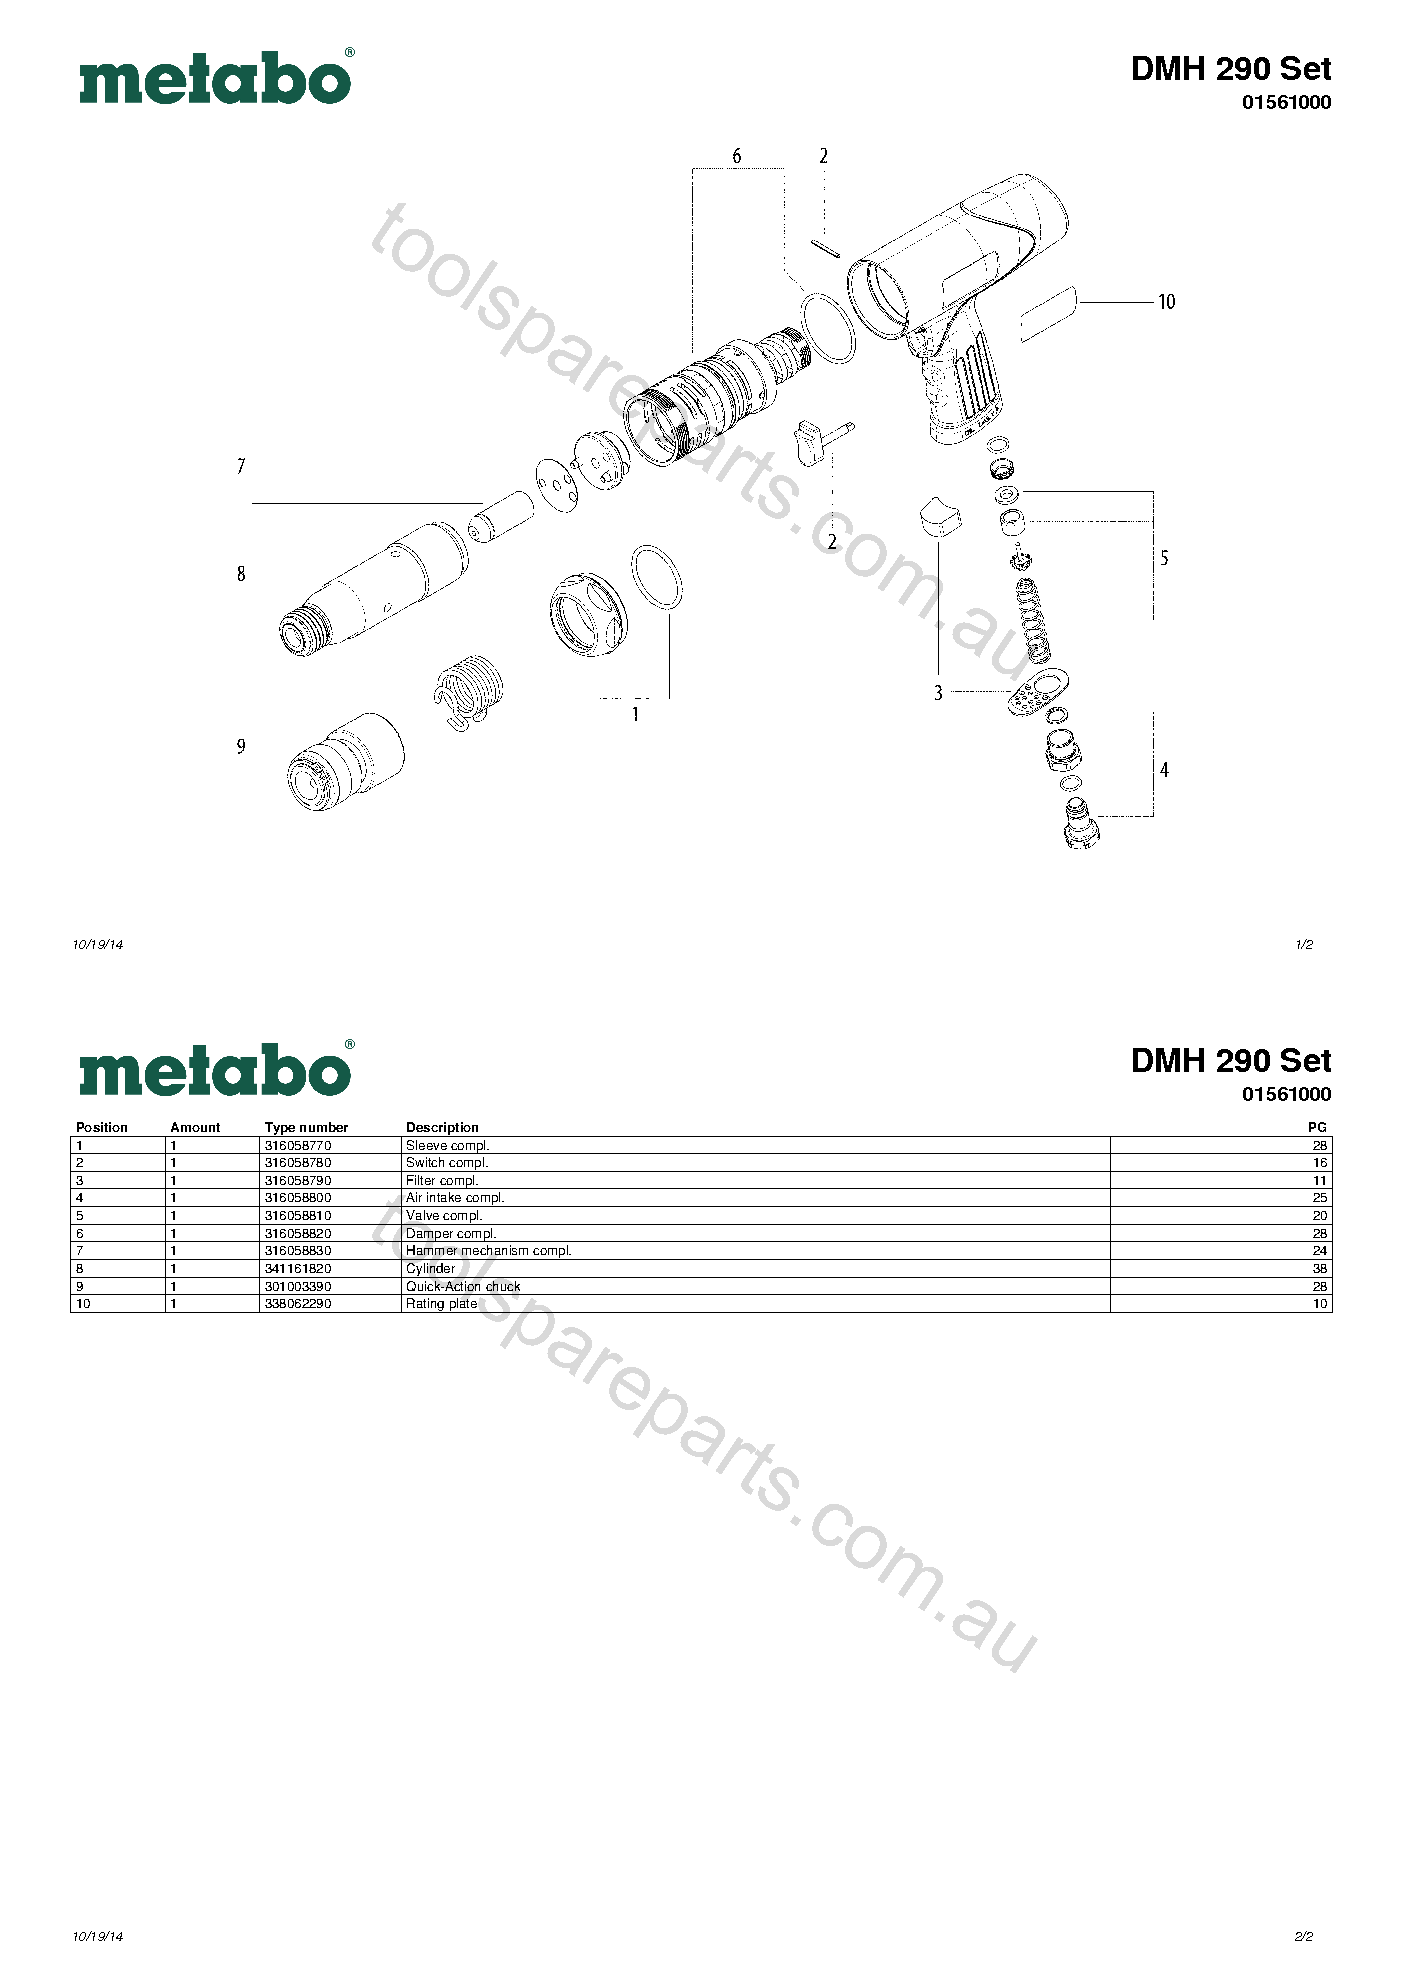 Metabo DMH 290 Set 01561000  Diagram 1